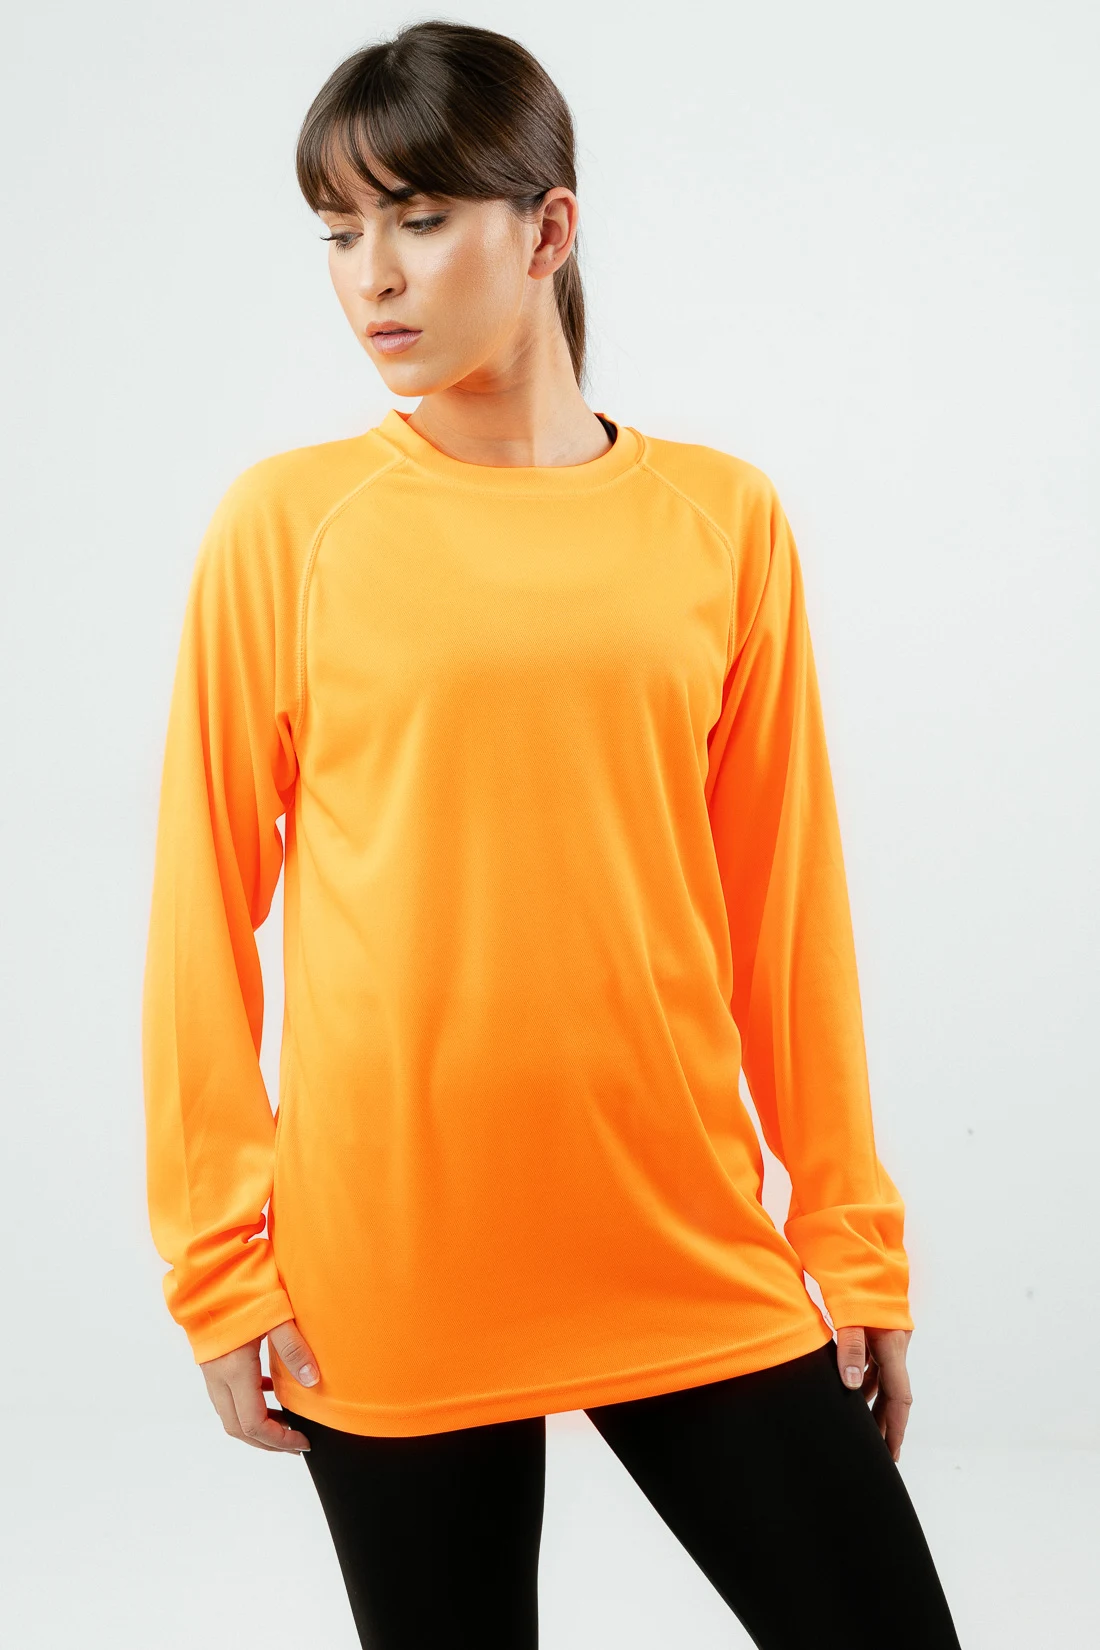 T-shirt Duria - Orange Fluor